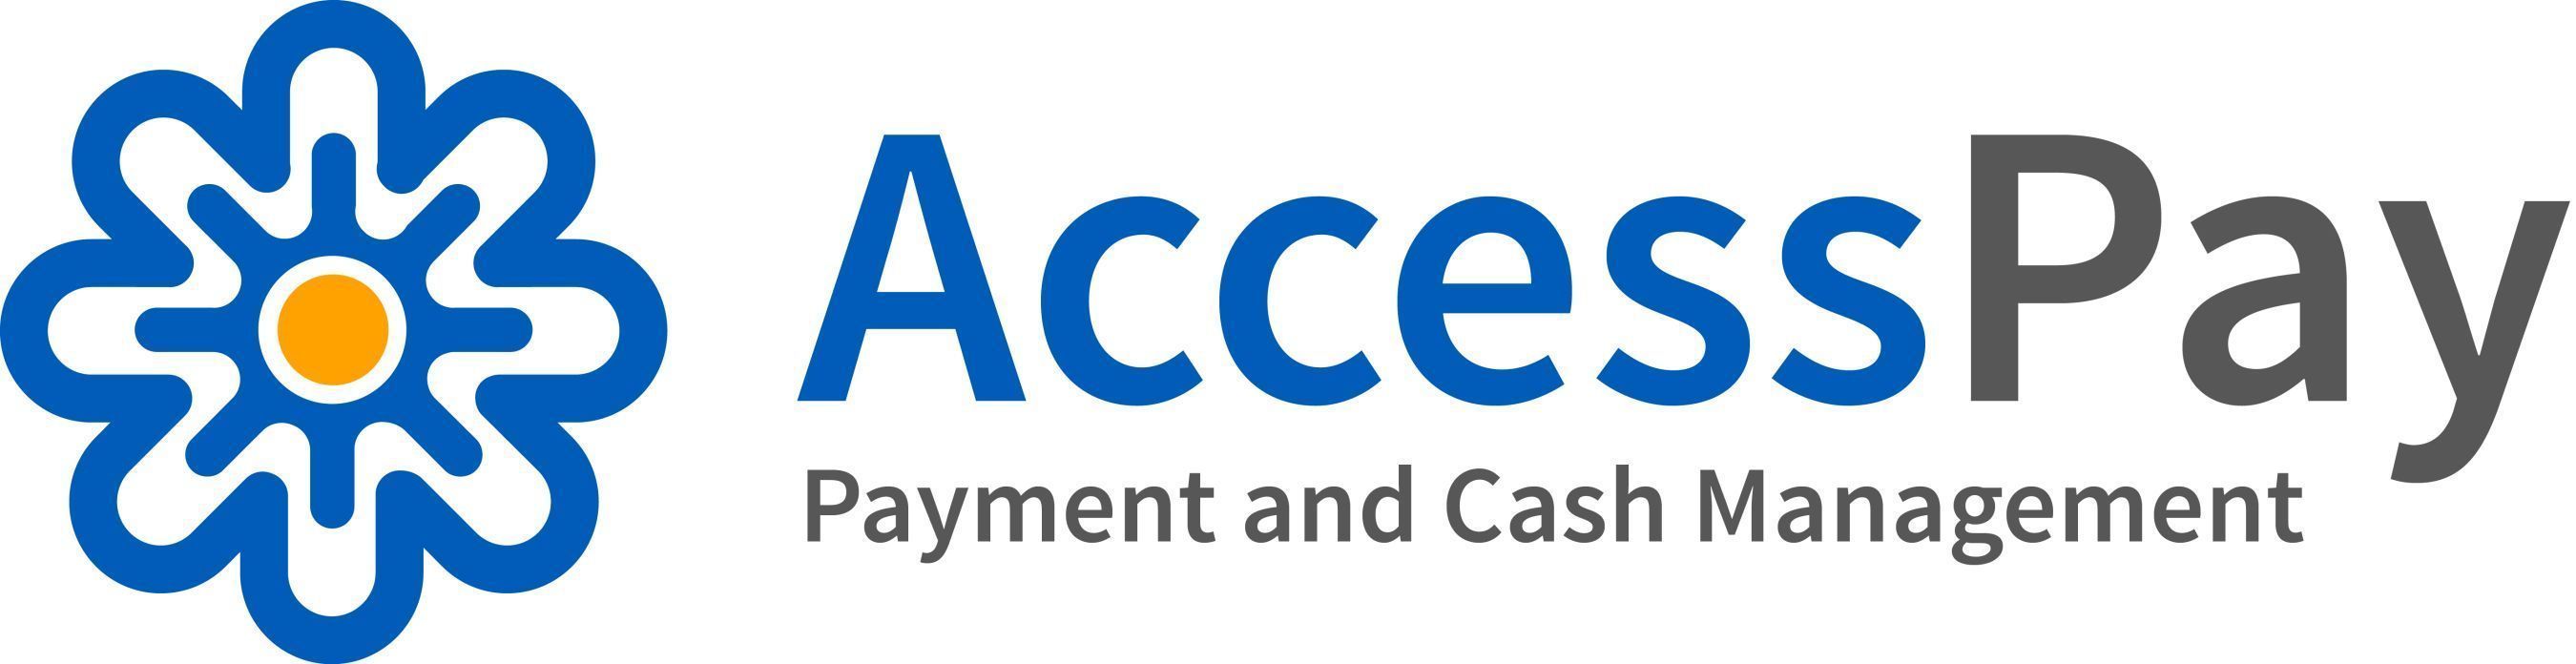 AccessPay Logo (PRNewsFoto/AccessPay)